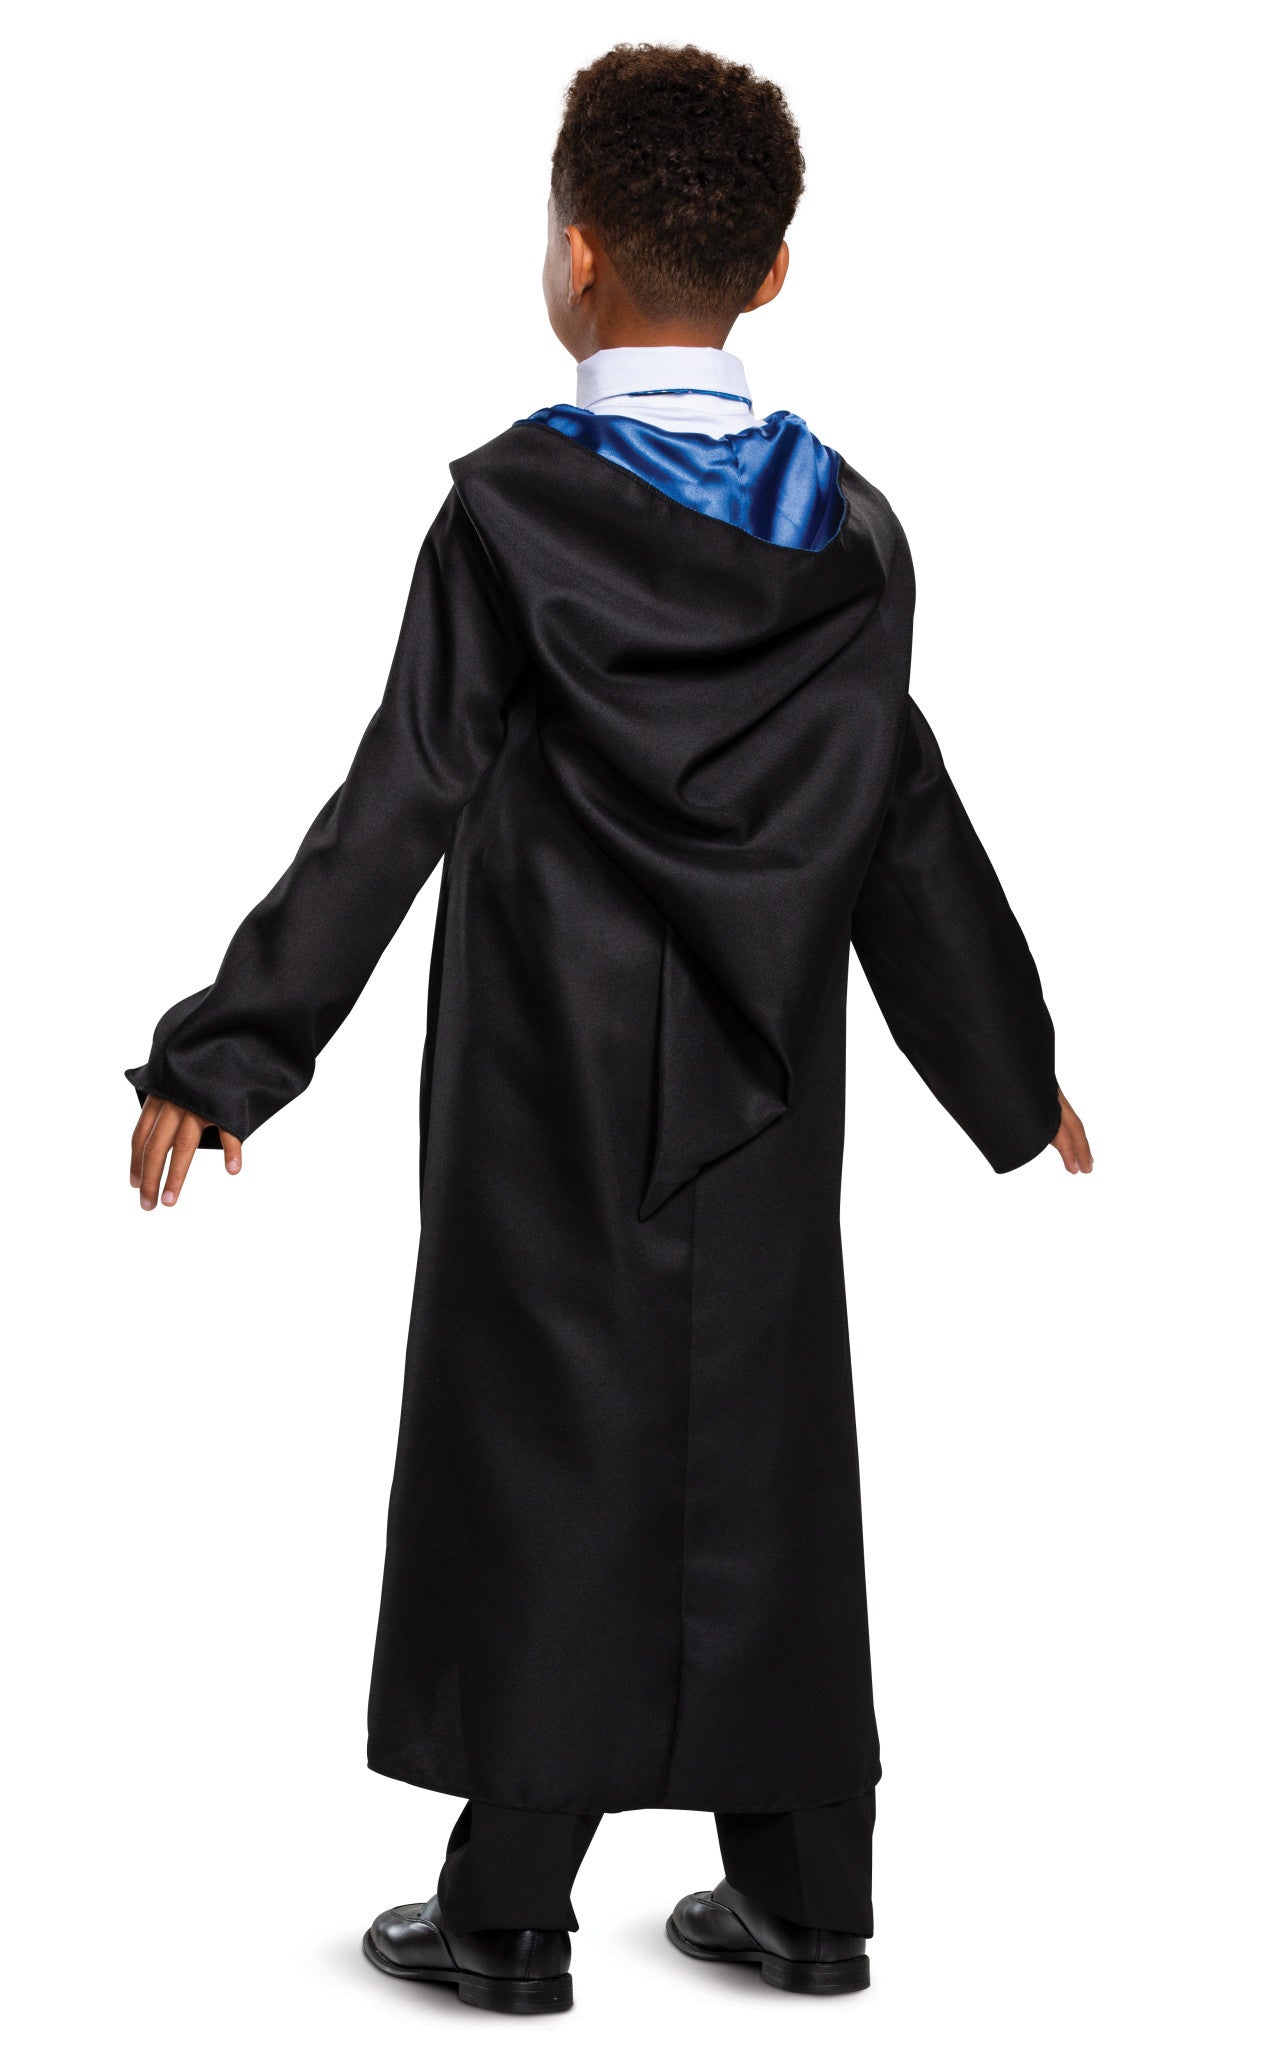 Kids' Deluxe Harry Potter Slytherin Robe Costume - Size 4-6 - Black